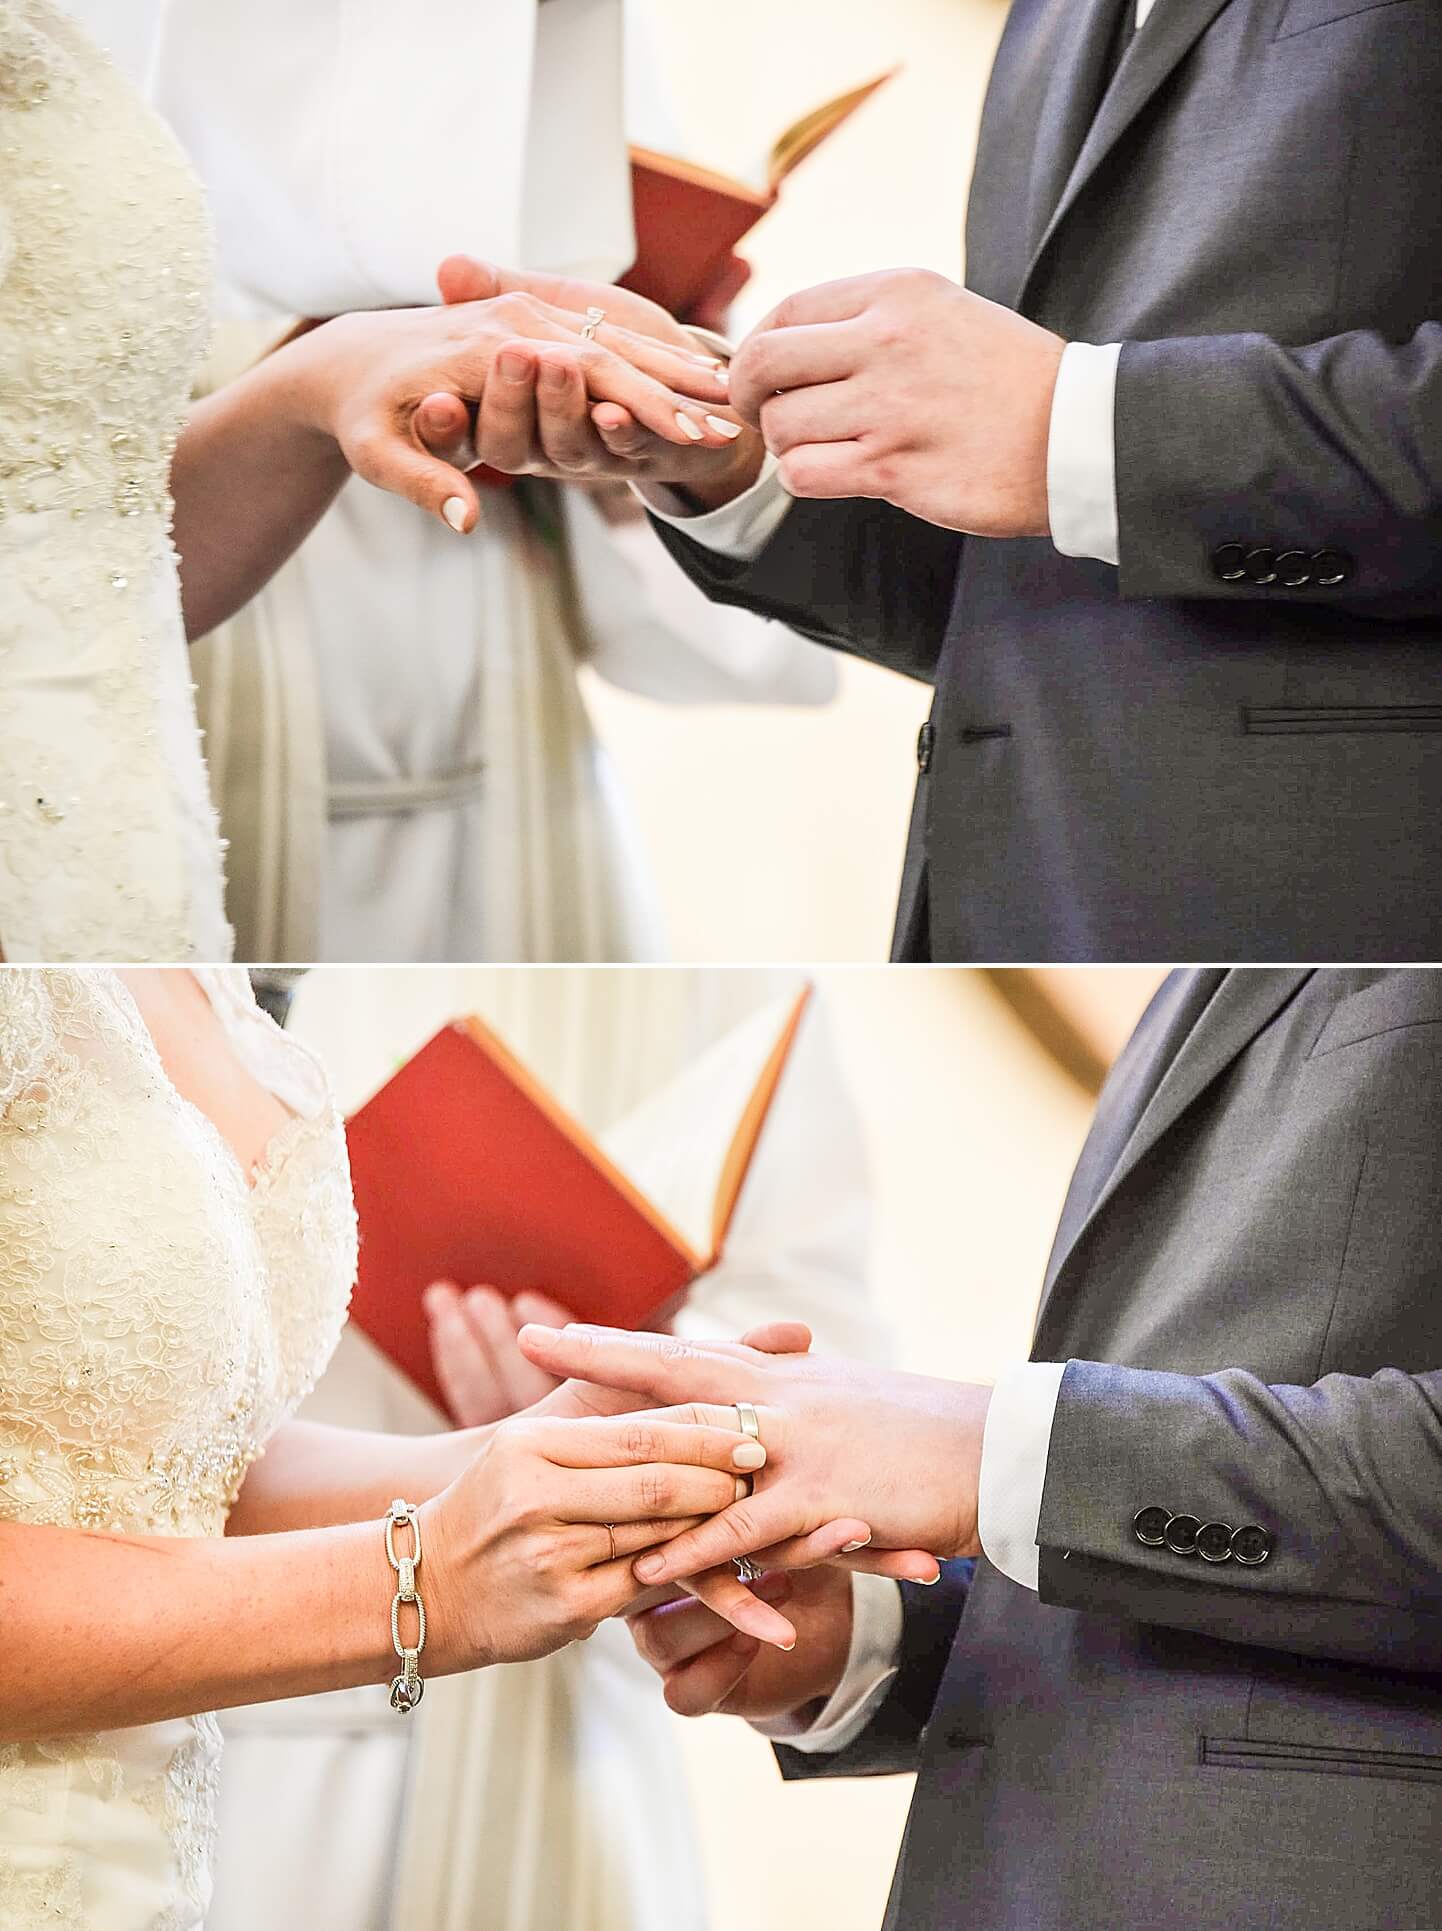 Detail photos of wedding rings exchange | By Baca Raton Wedding Photographer | White House Wedding Photography